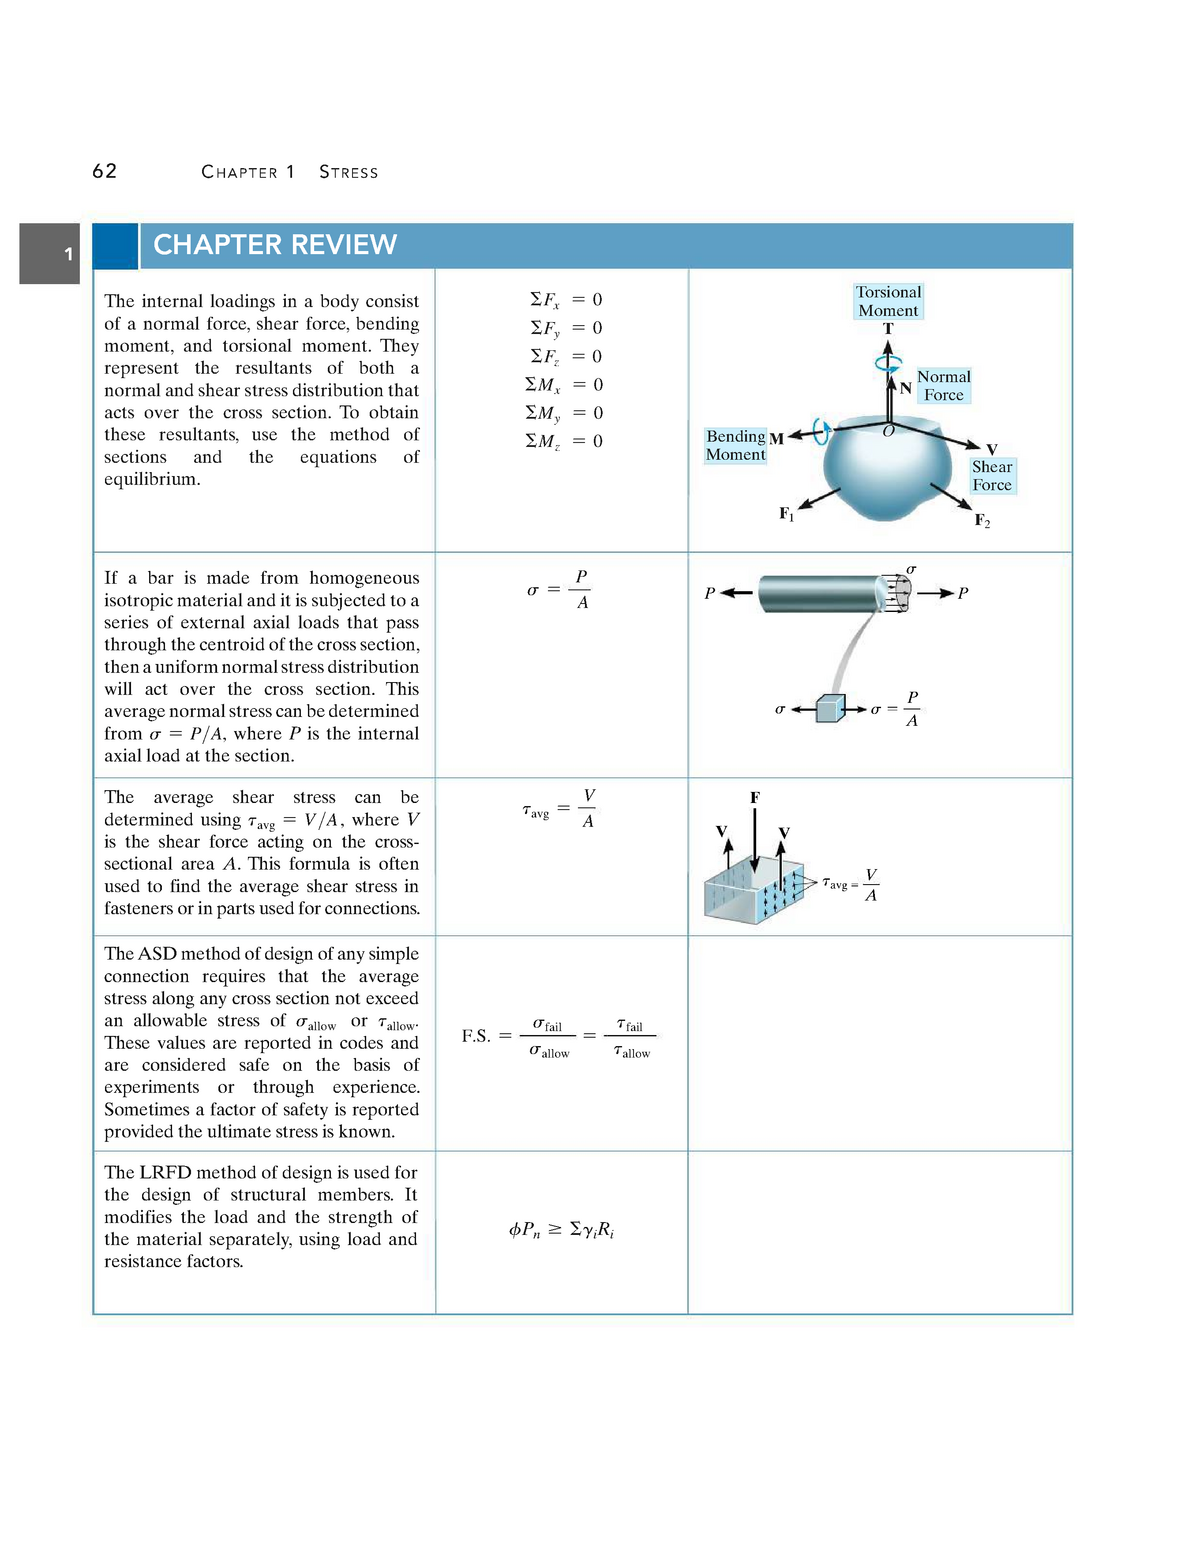 Mechanics of materials chapter summary - 1 62 CHAPTER 1 STRESS